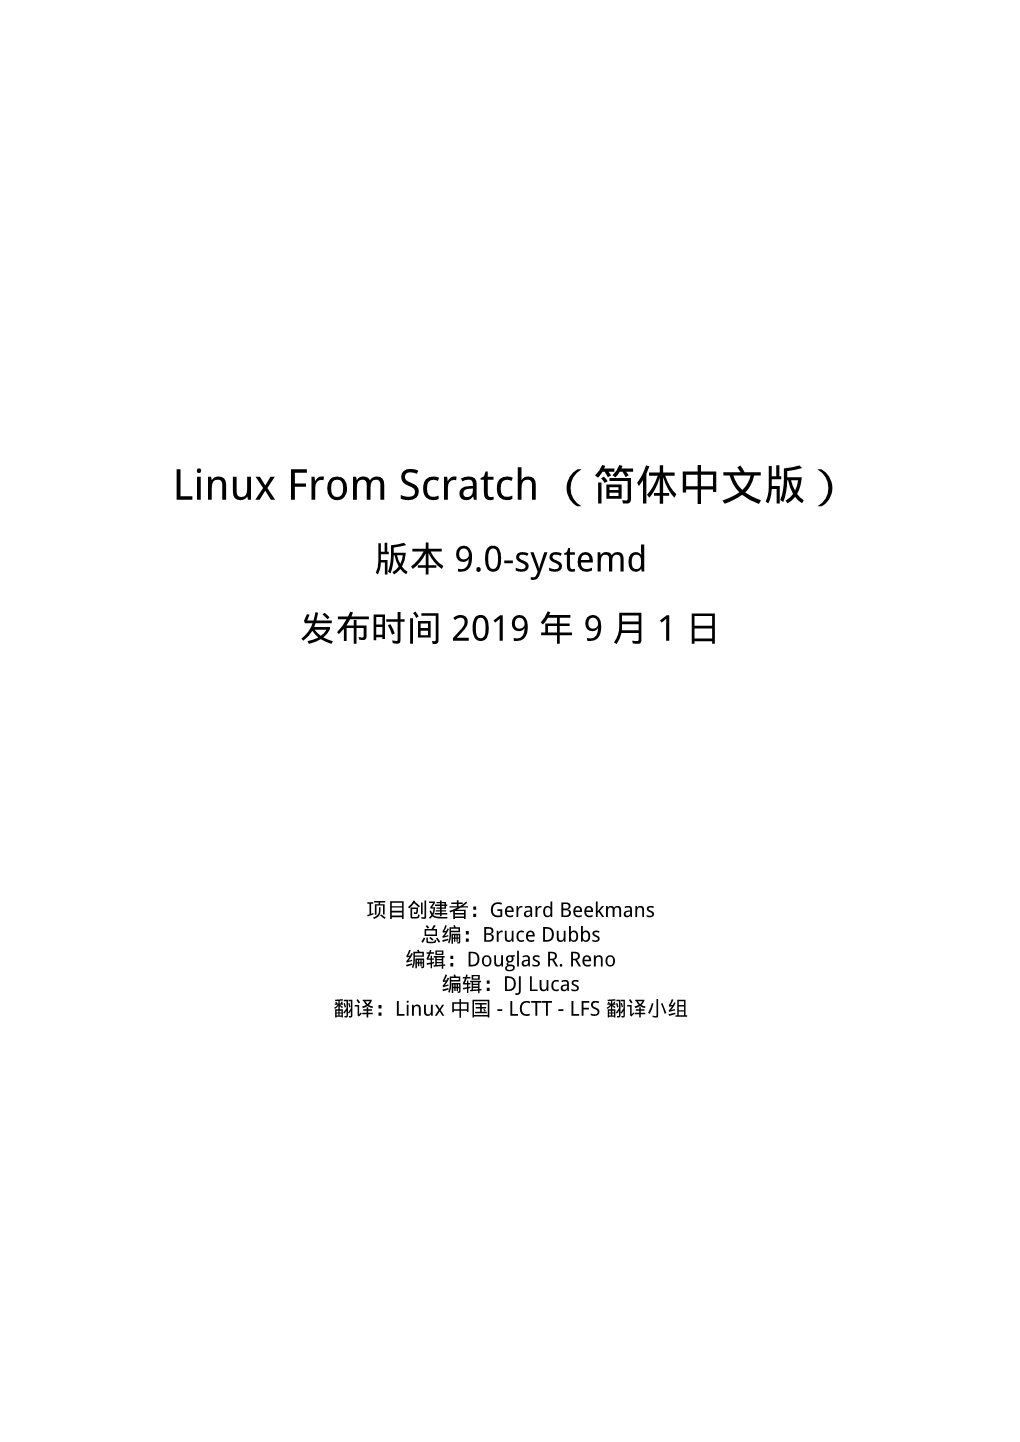 Linux from Scratch （简体中文版） 版本 9.0-Systemd 发布时间 2019 年 9 月 1 日